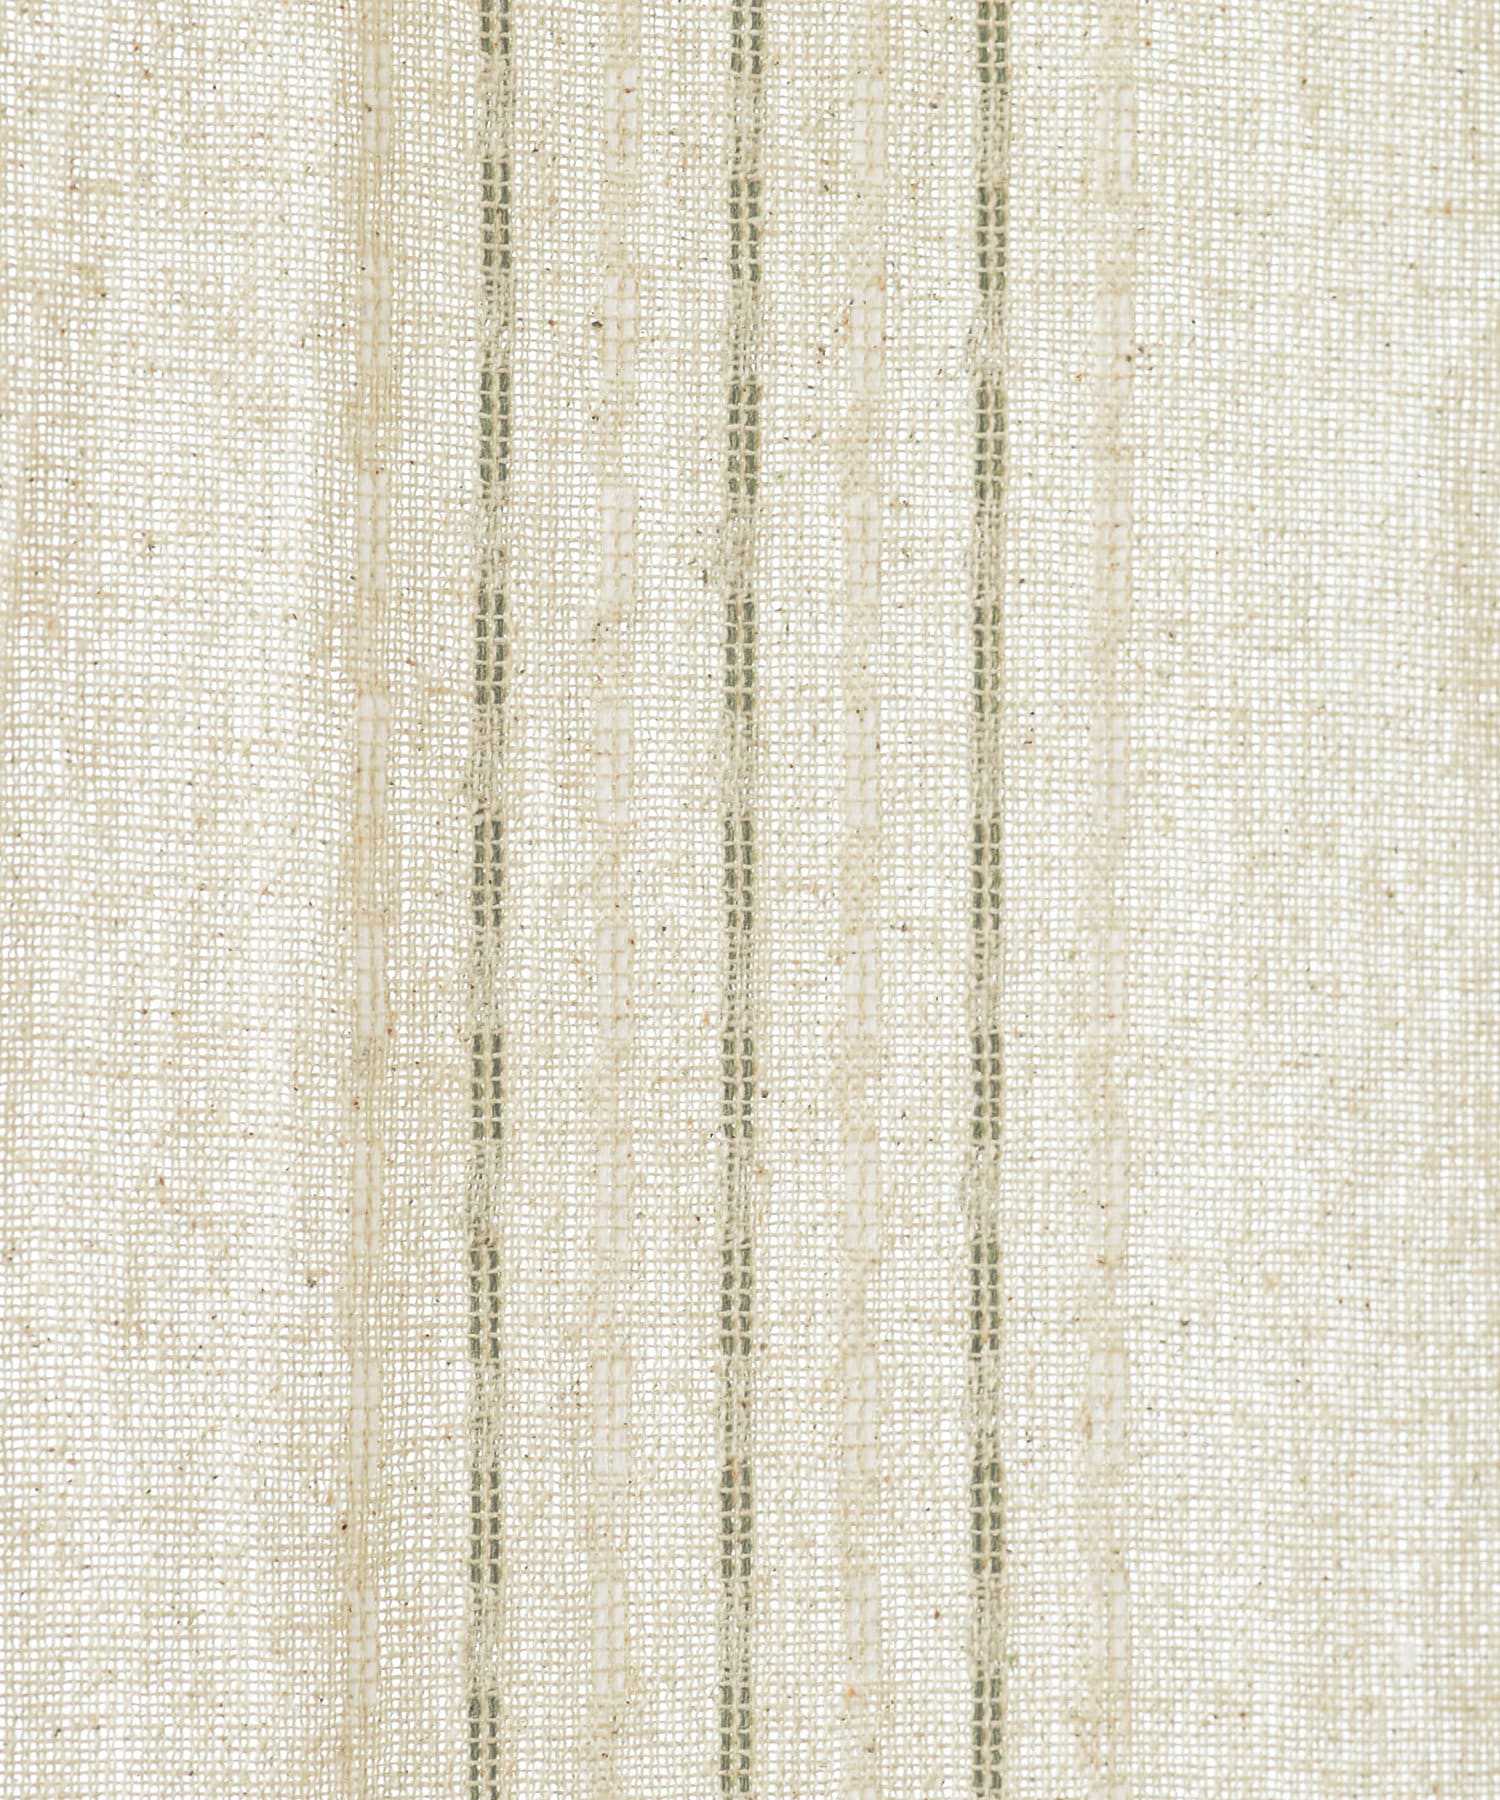 3COINS(スリーコインズ) 刺繍スタイルカーテン